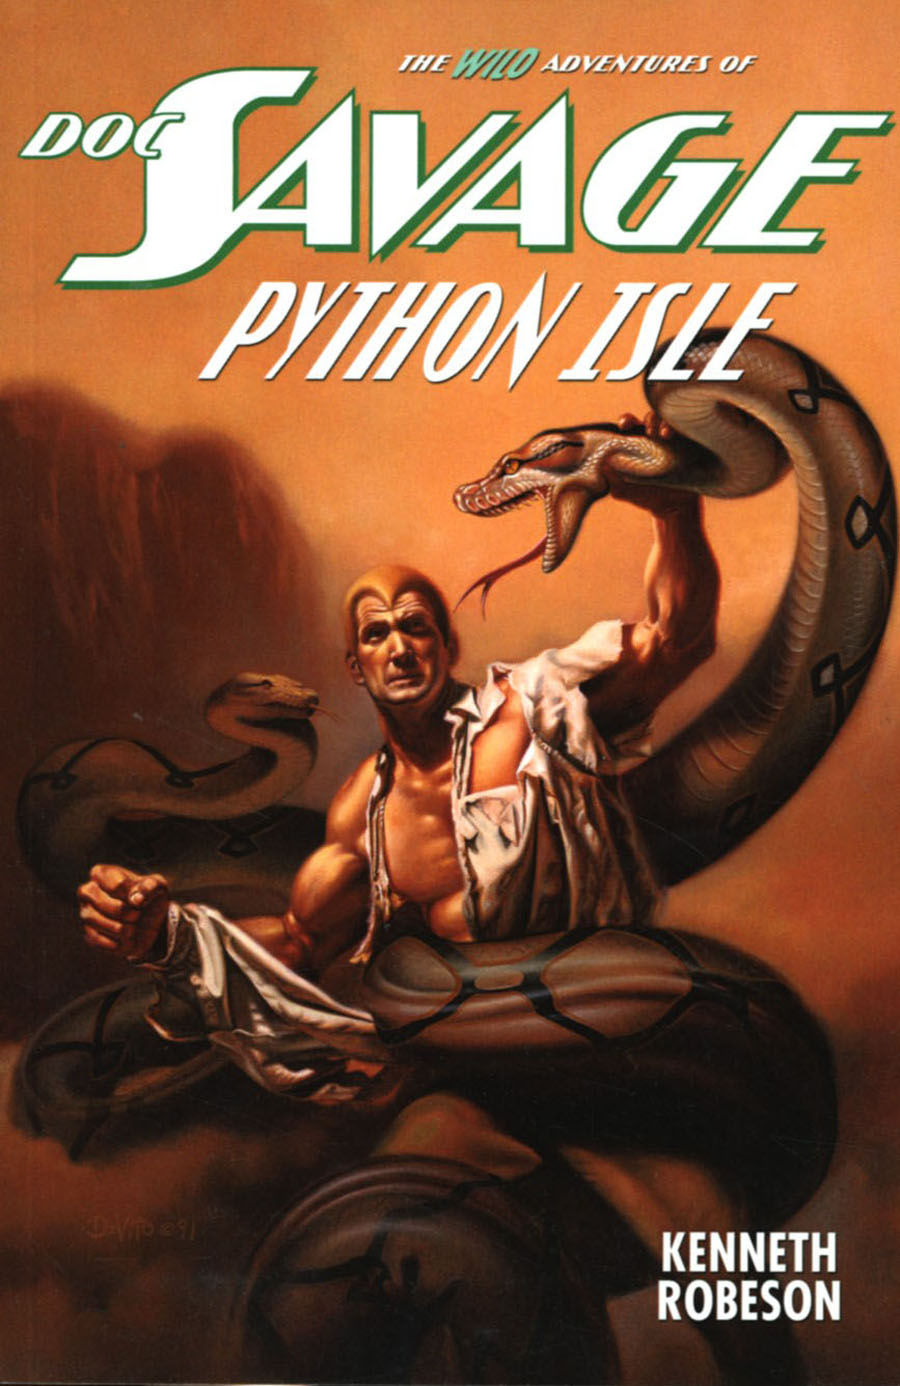 Doc Savage Wild Adventures Vol 1 Python Isle SC